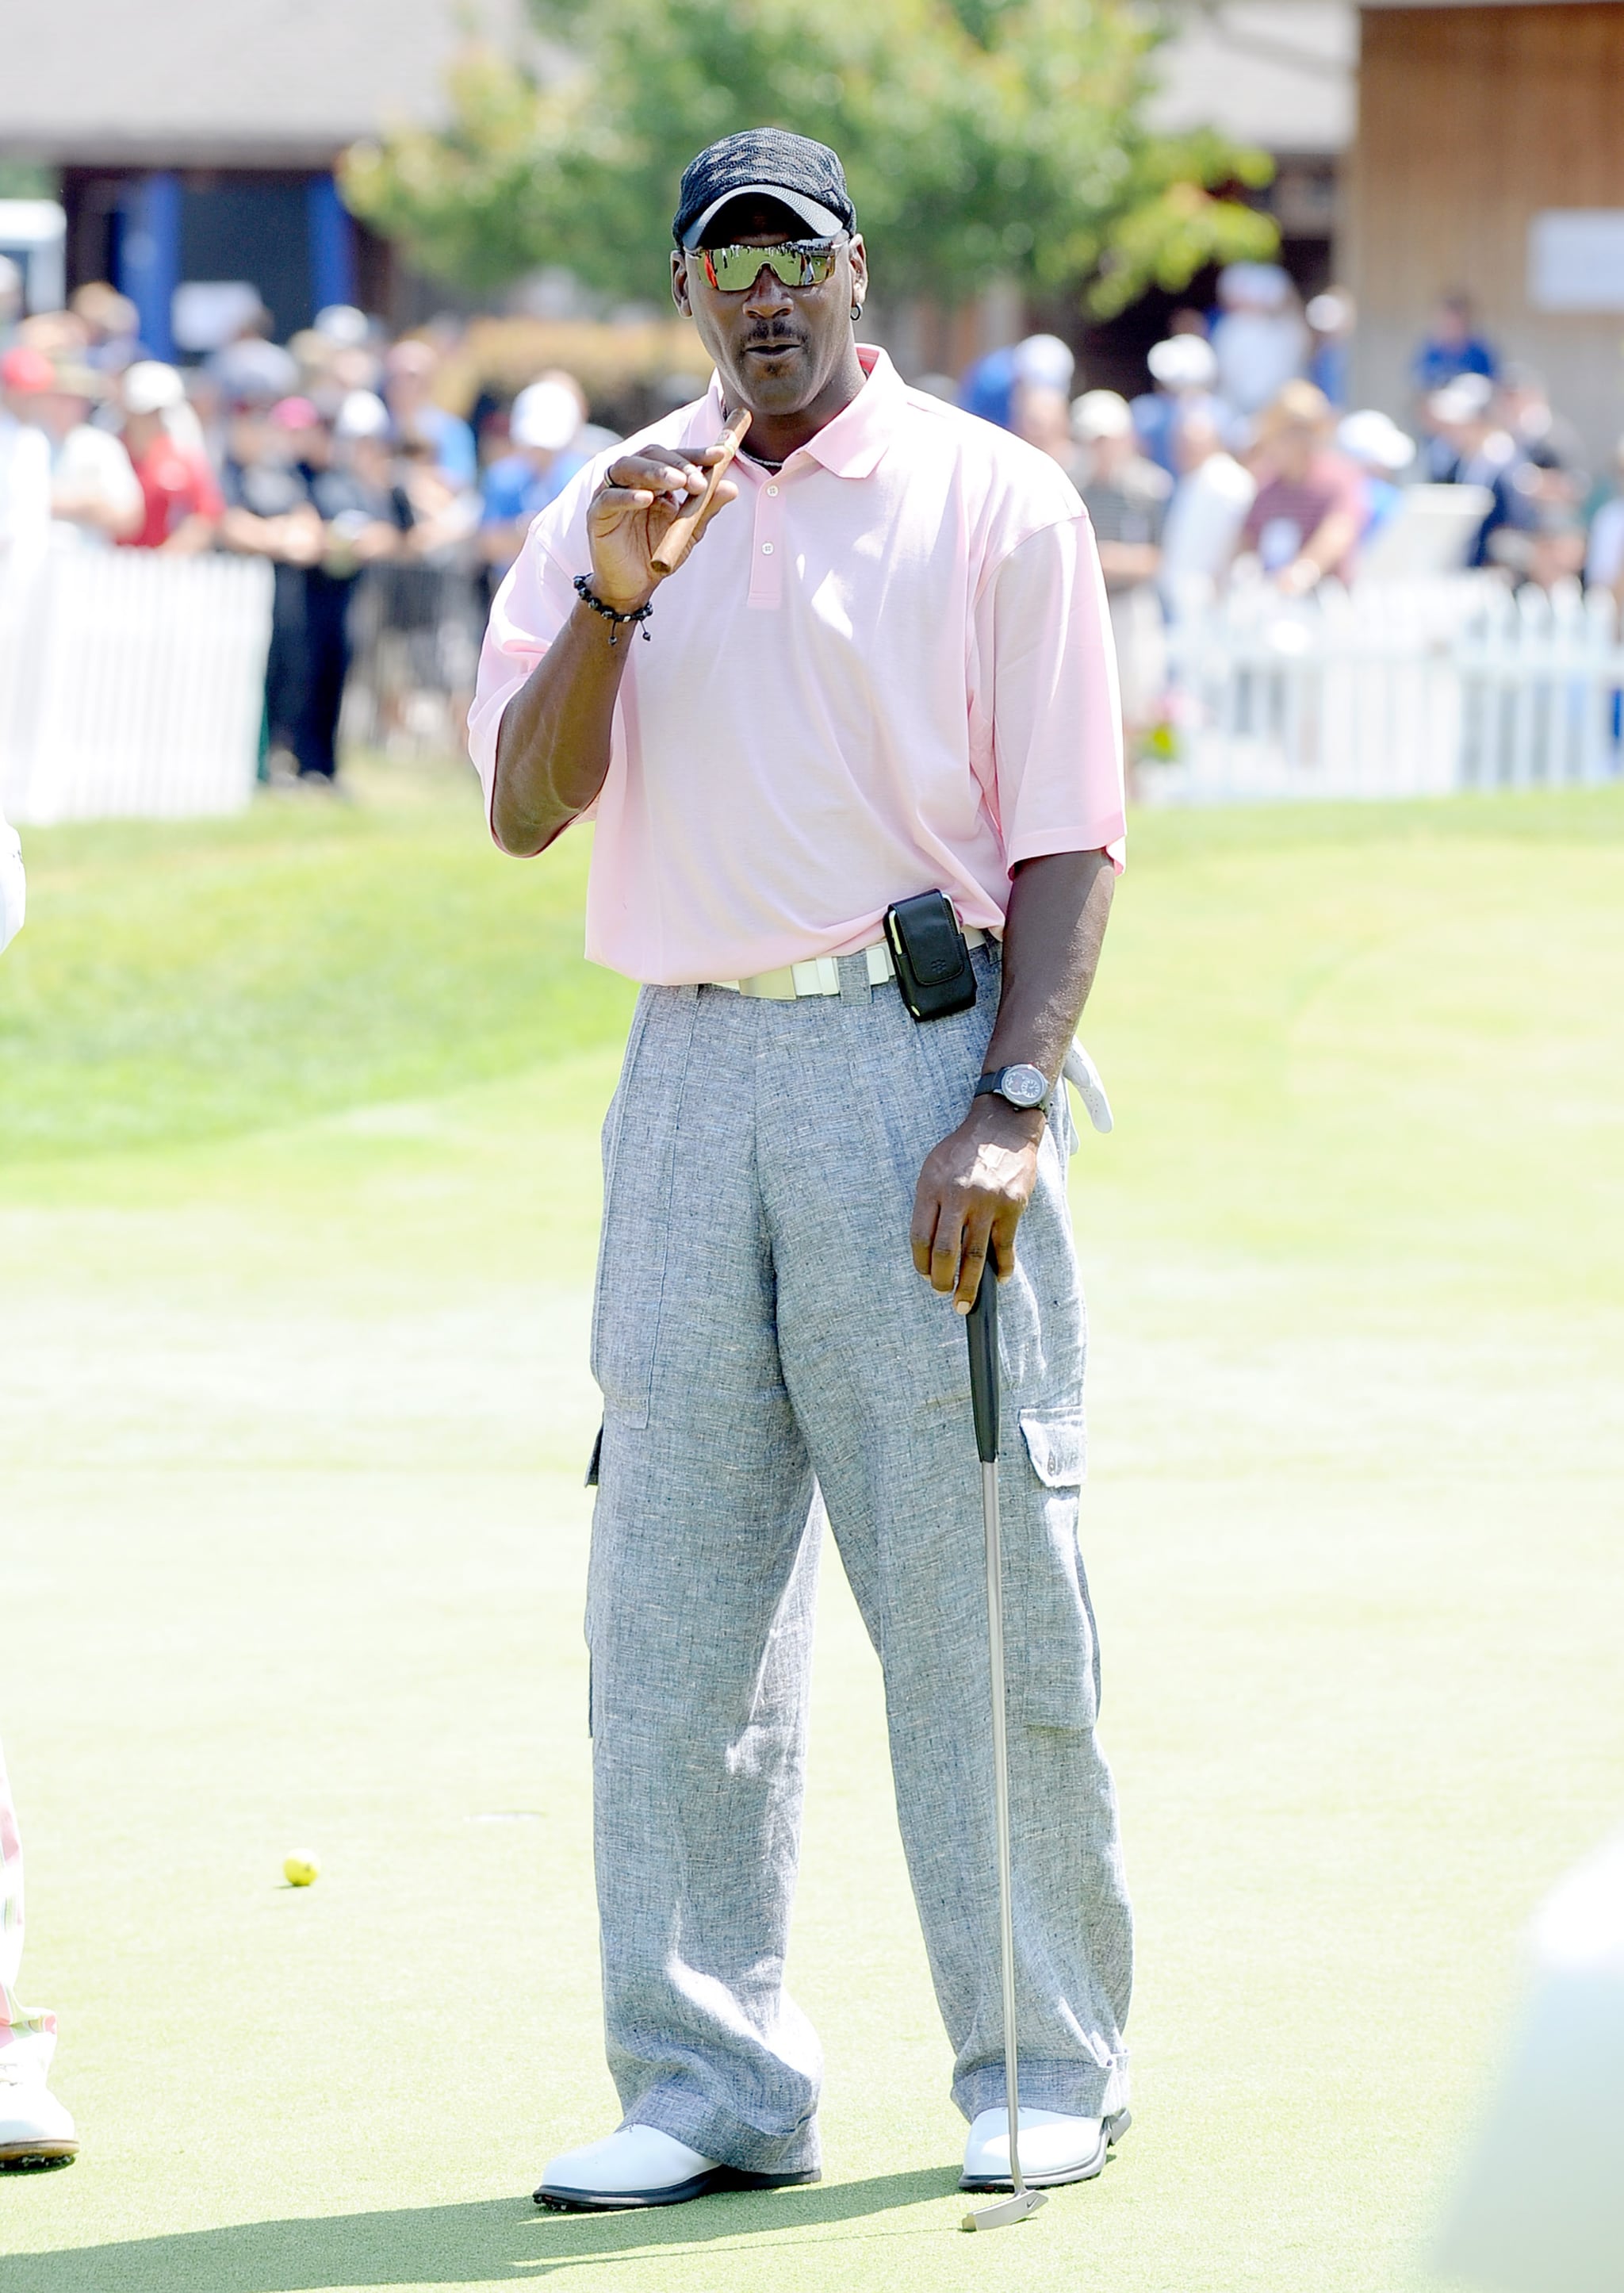 The best of MJ golfing